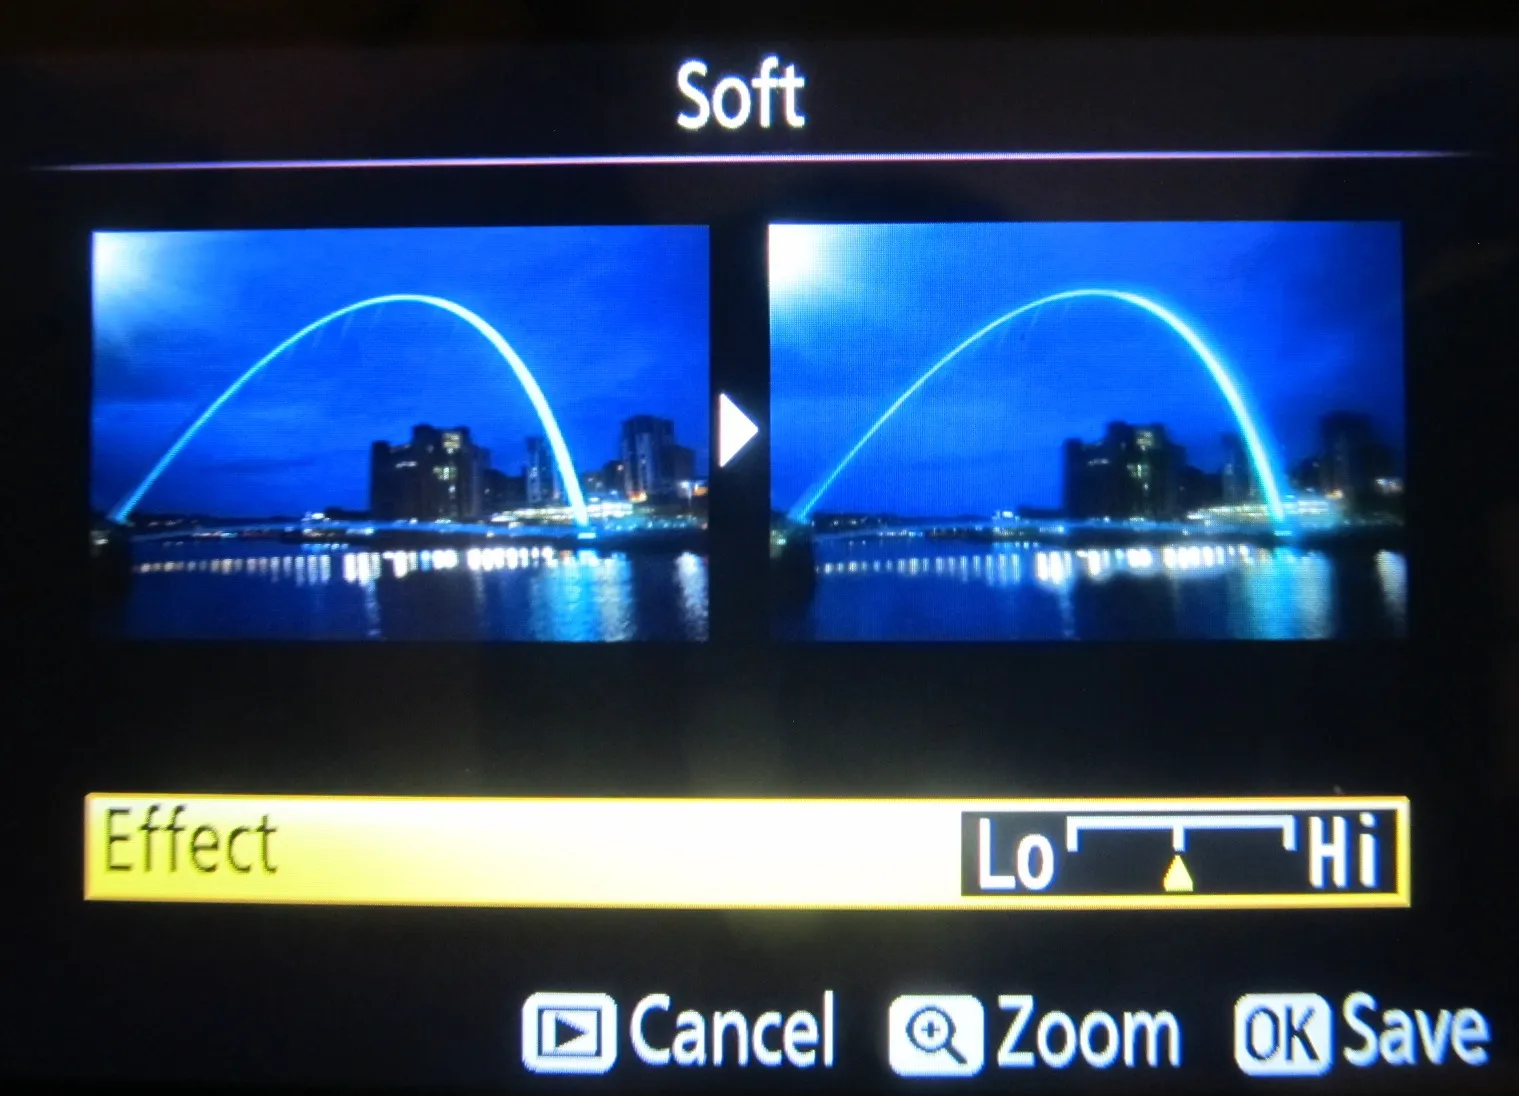 Nikon D5300 soft filter options